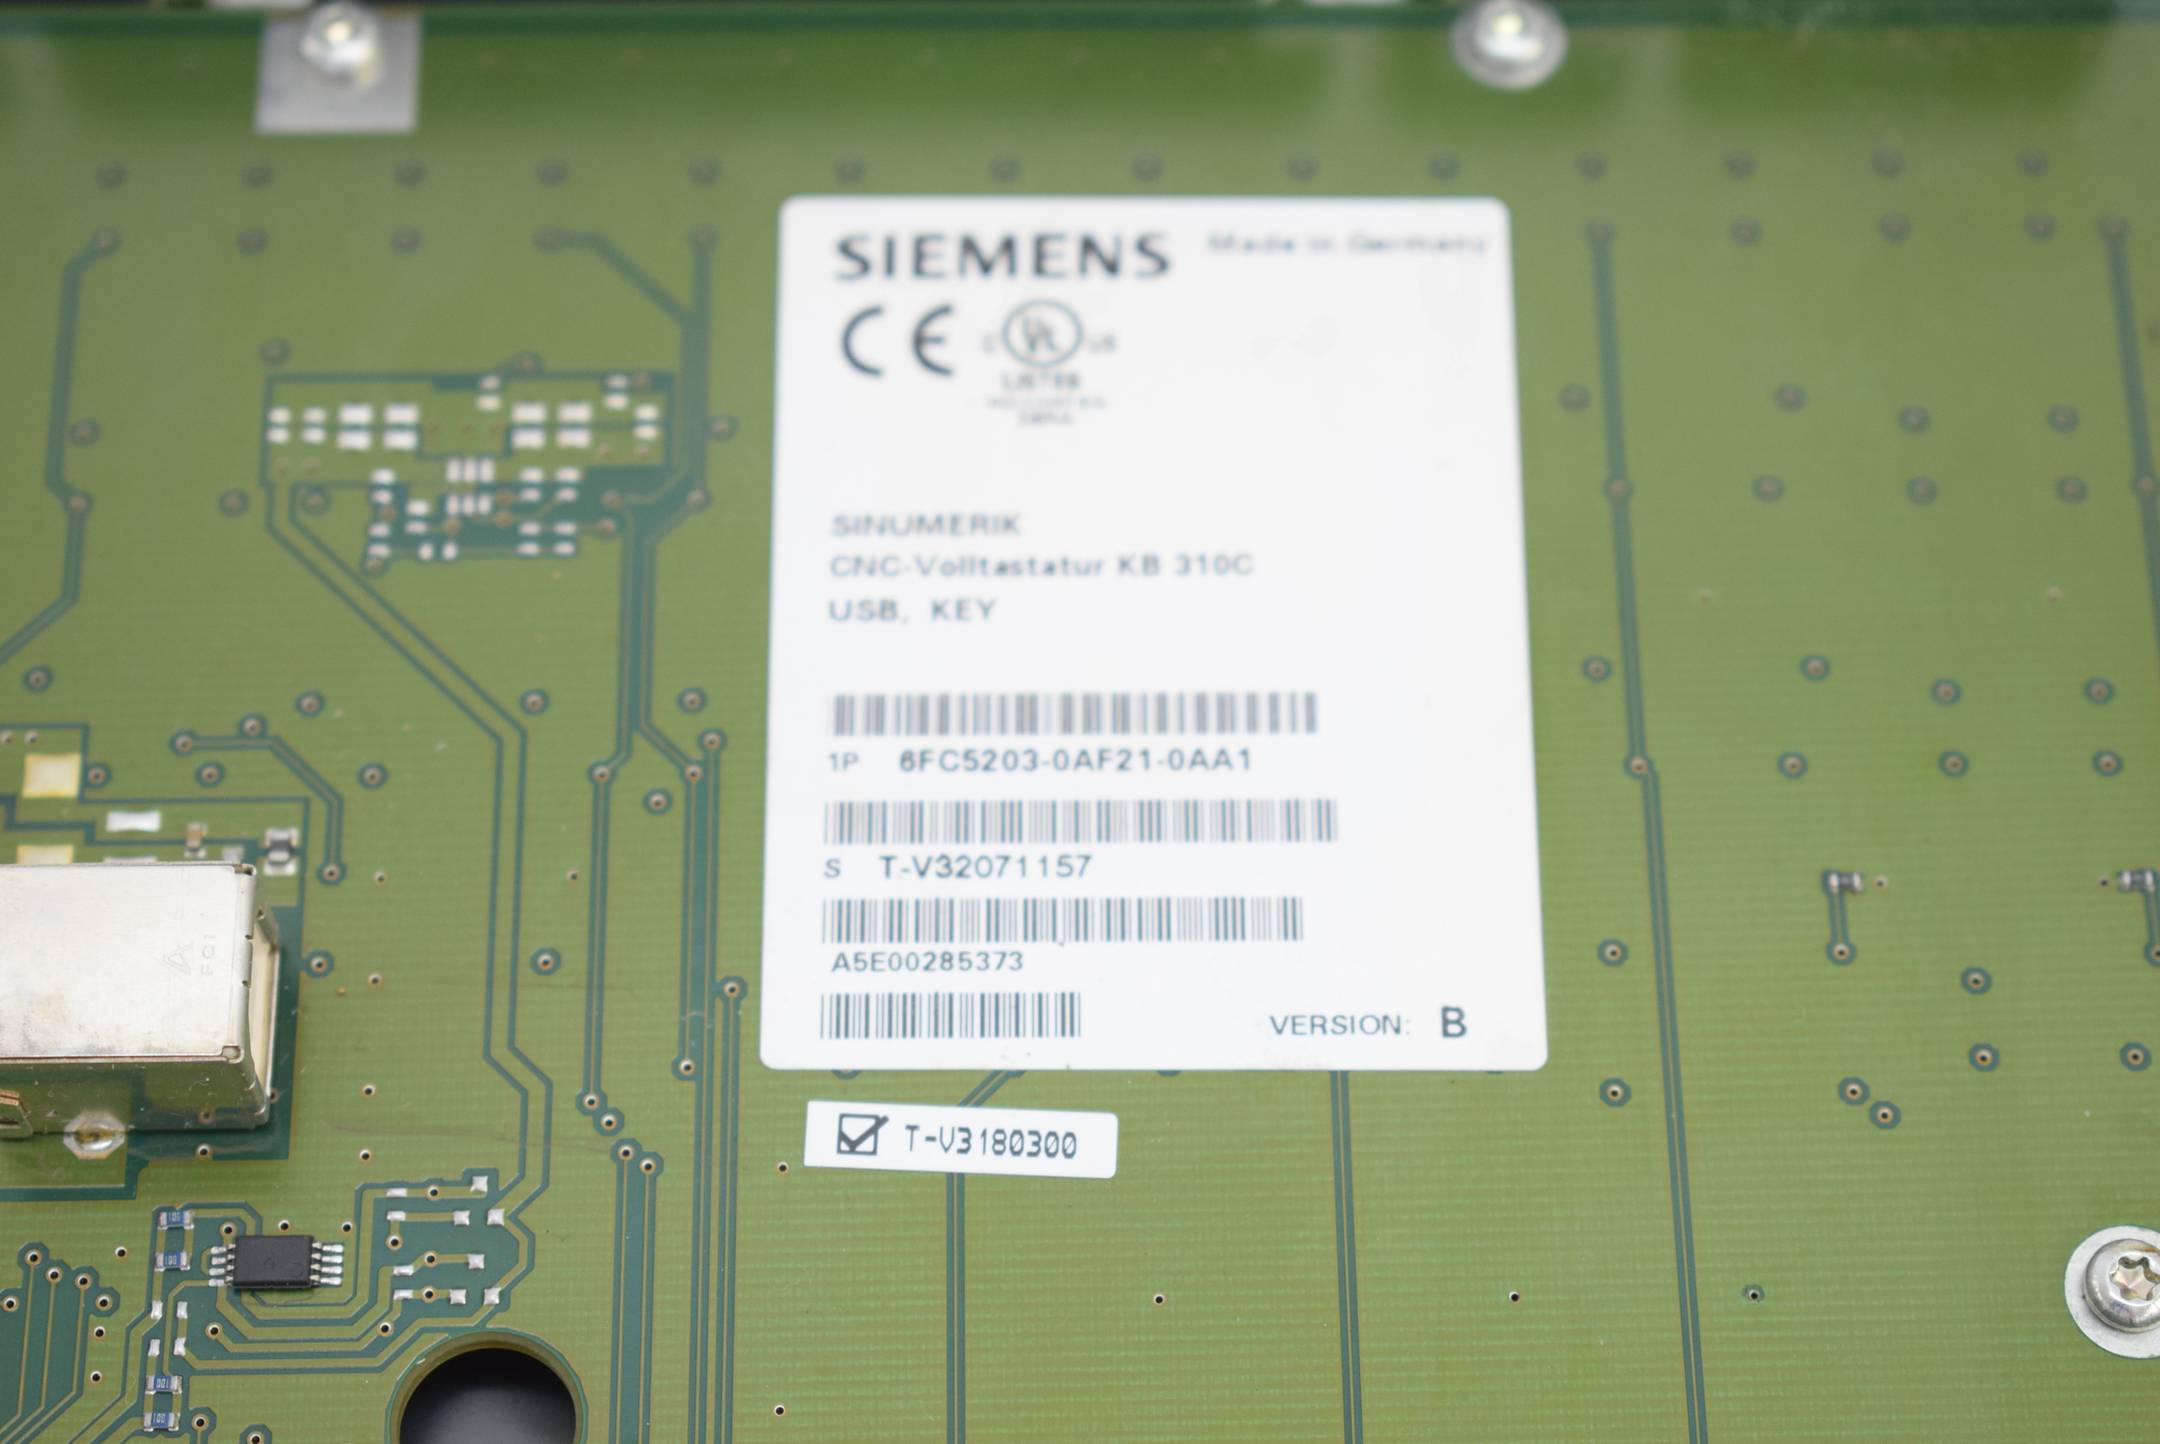 Siemens Sinumerik CNC-Volltastatur 6FC5203-0AF21-0AA1 ( 6FC5 203-0AF21-0AA1 )